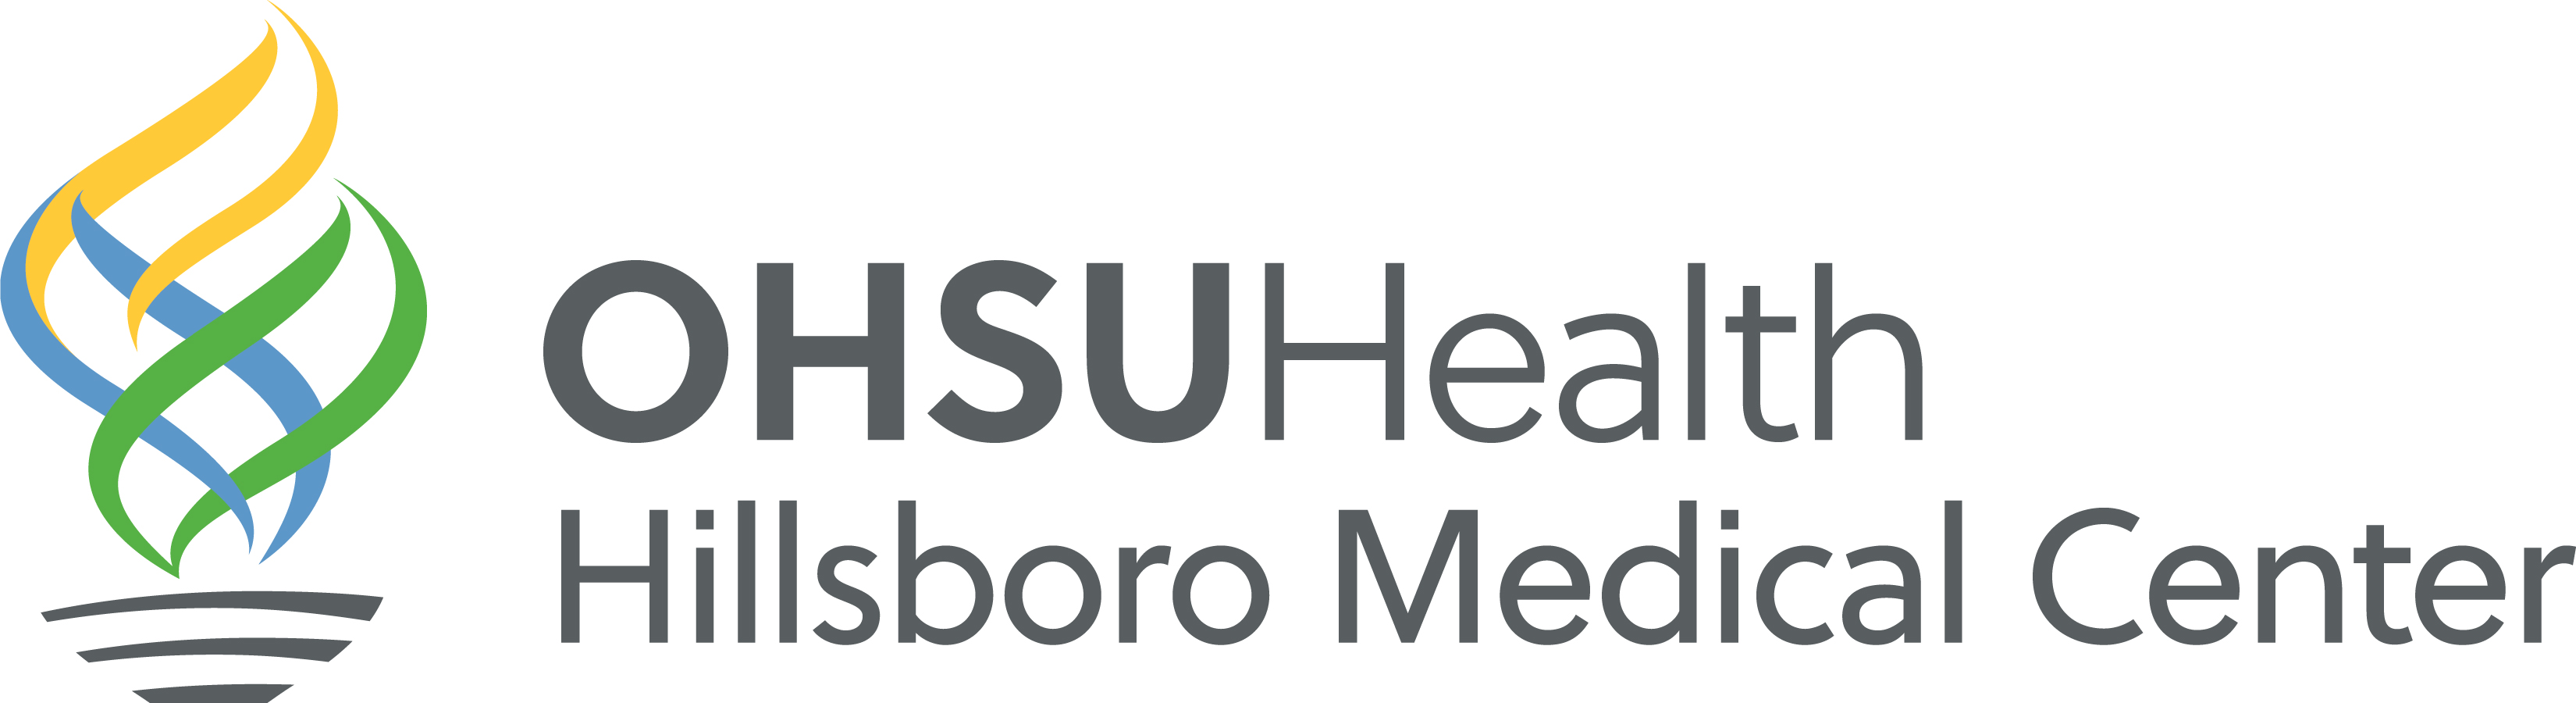 OHSU Hillsboro Medical Center logo